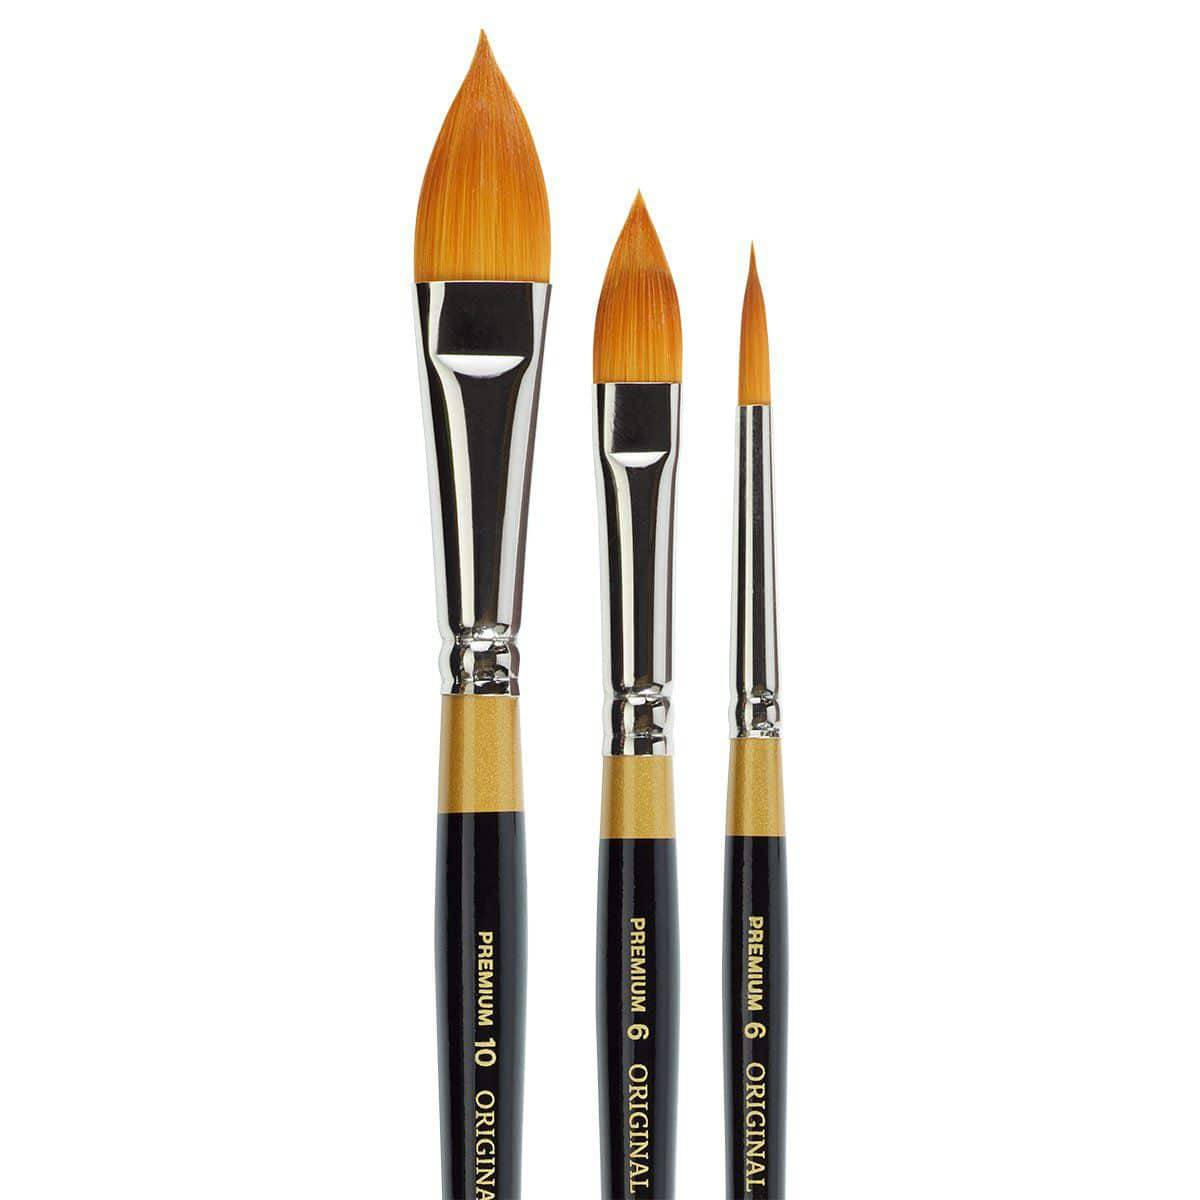 KINGART® Original Gold® 9275 Oval Mop Super Soft Dyed Black Natural Goat  Hair Series Premium Multimedia Artist Brushes